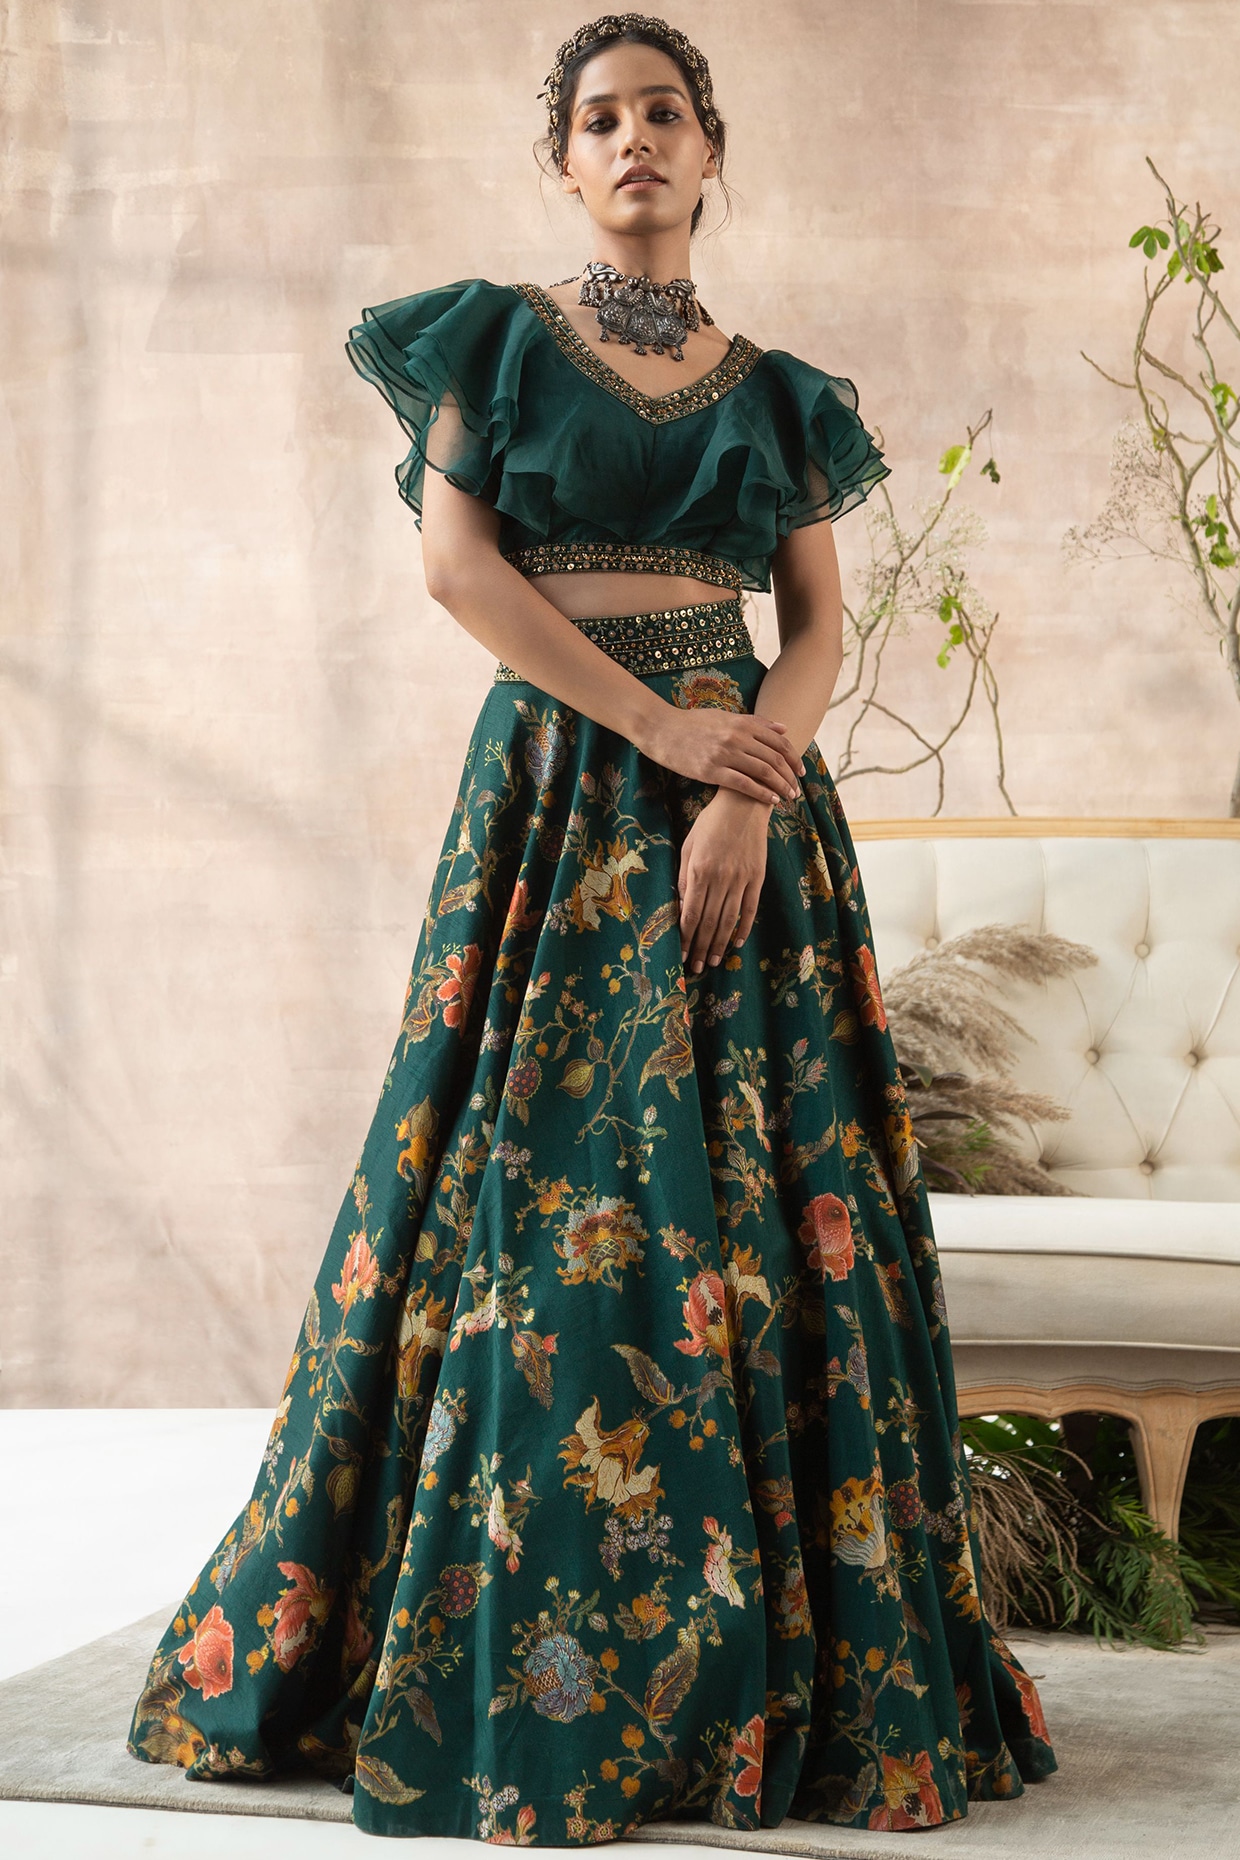 Gold Green Lehenga Choli Pakistani Wedding Dresses – Nameera by Farooq